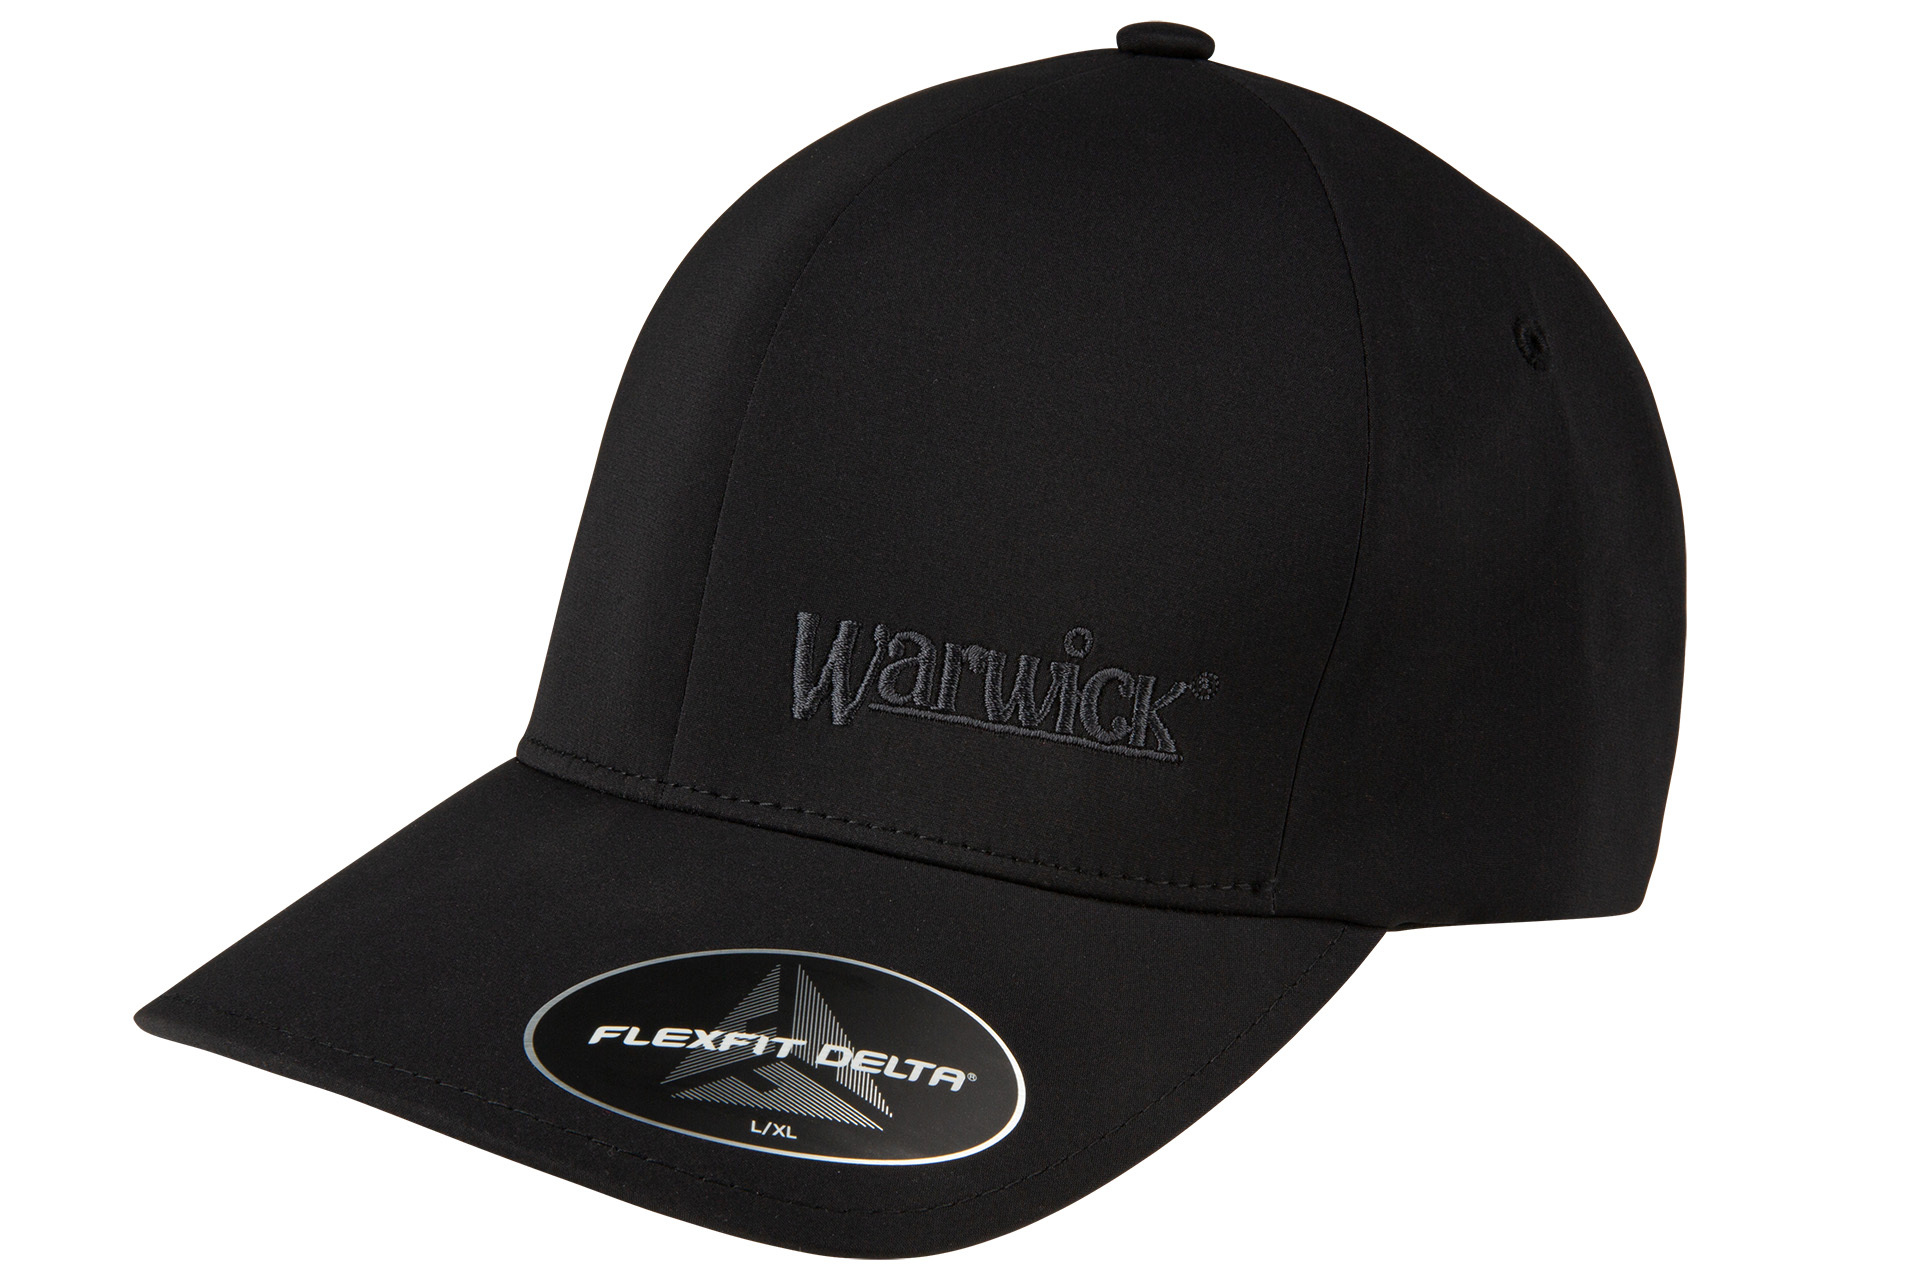 Warwick - Flexfit Delta Cap, Black - Size L/XL